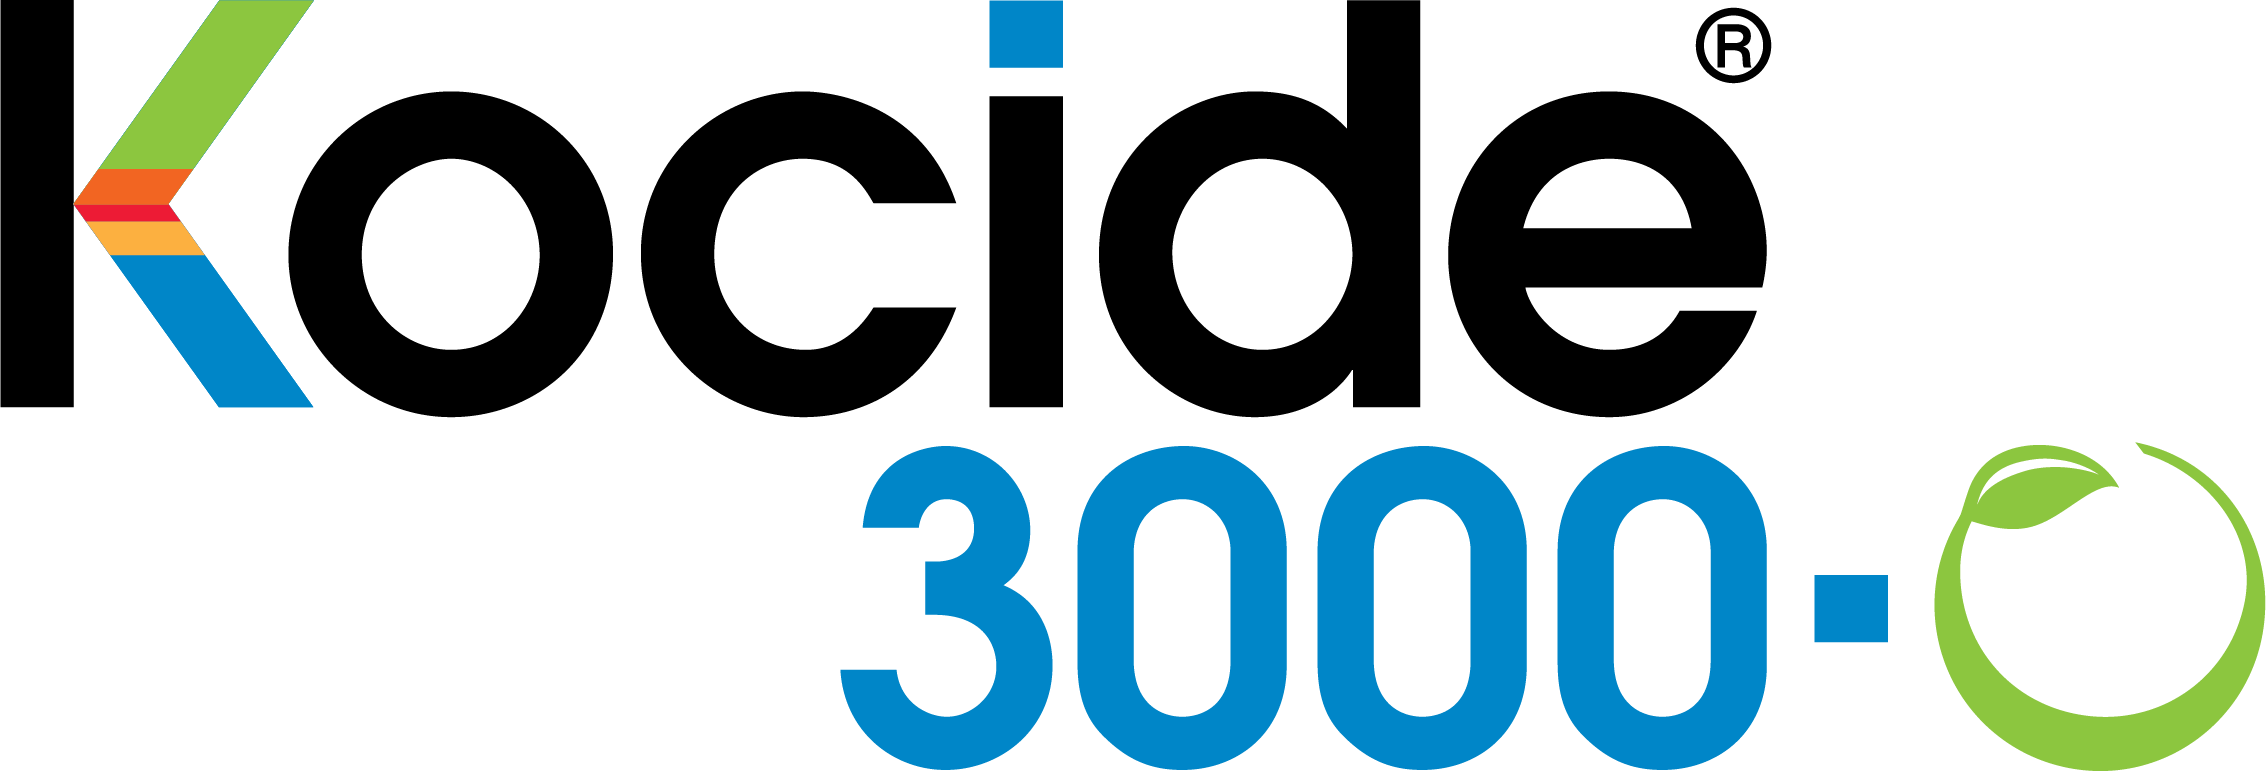 Kocide® 3000-O logo.